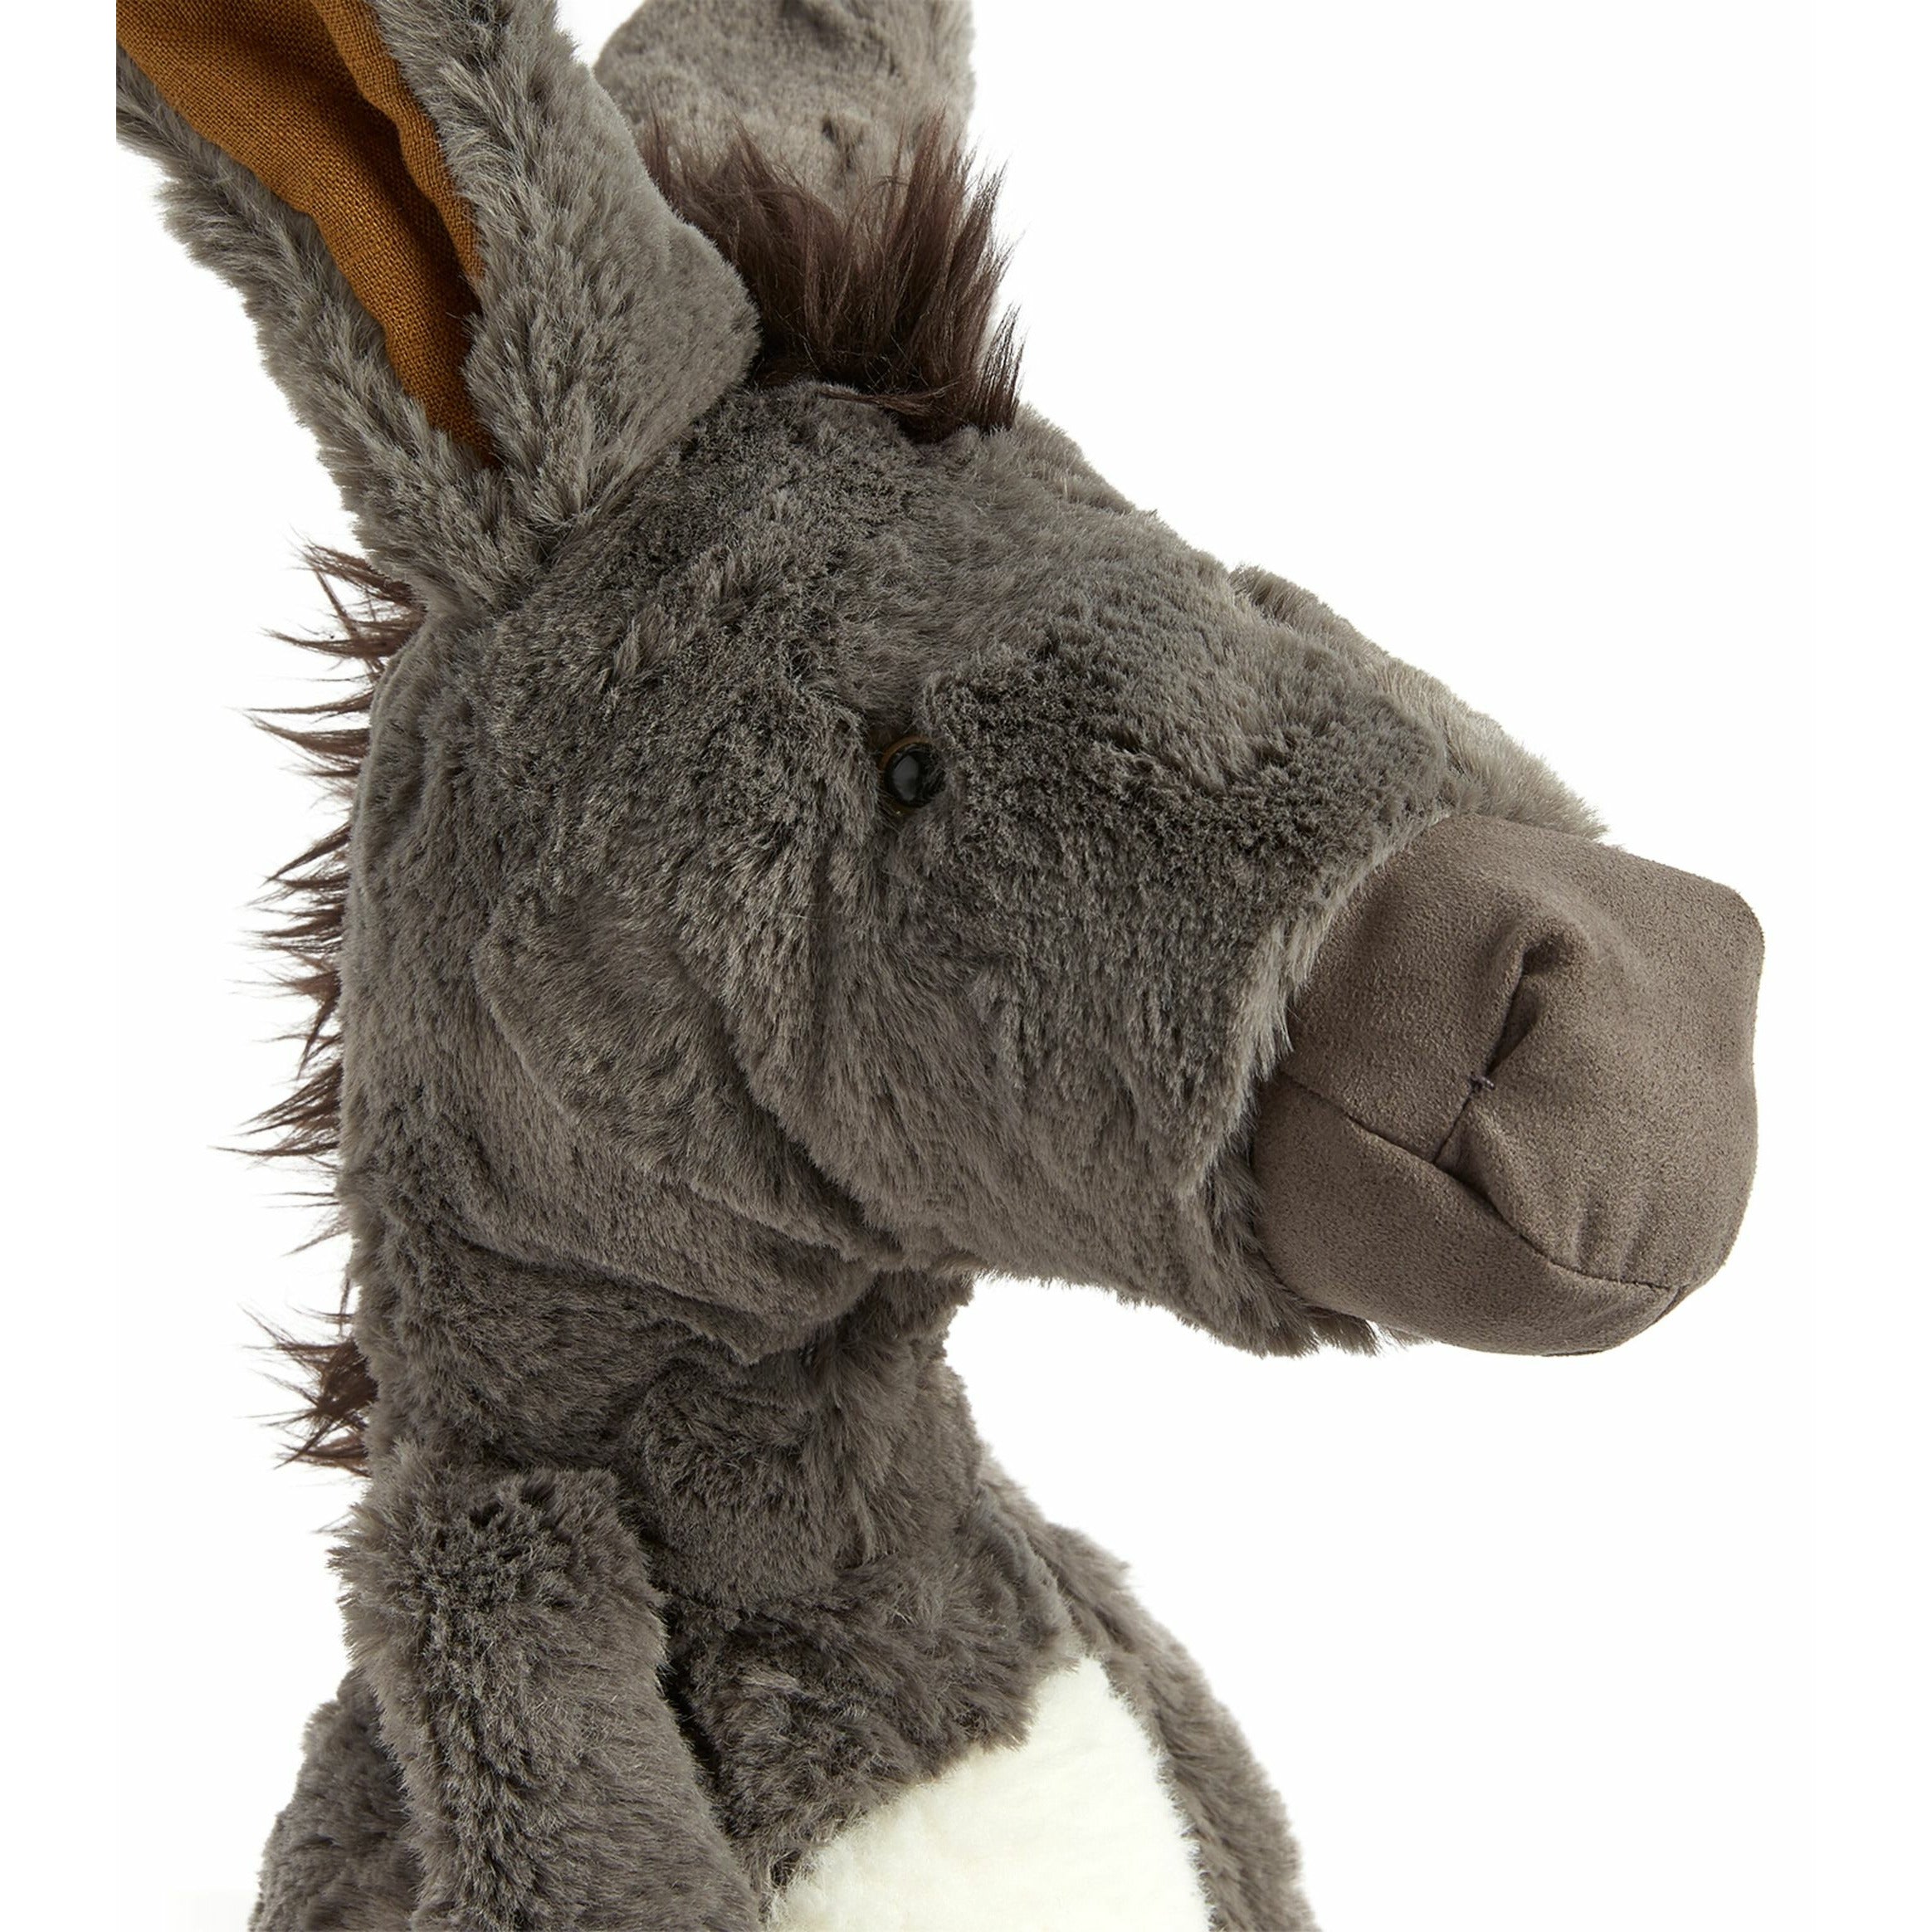 Les Babou Little Donkey Toy